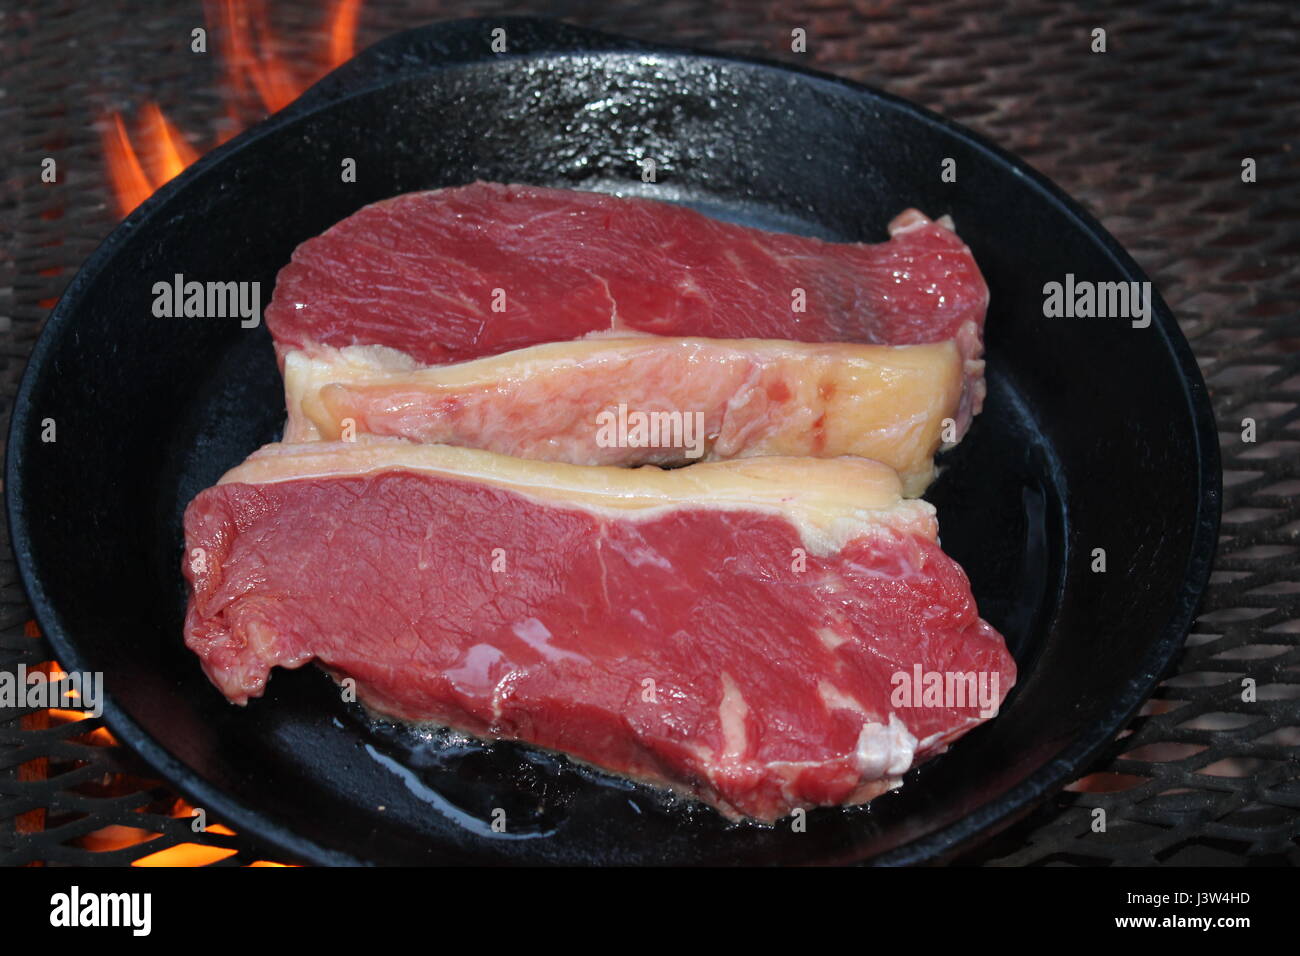 Steak on open fire Stock Photo